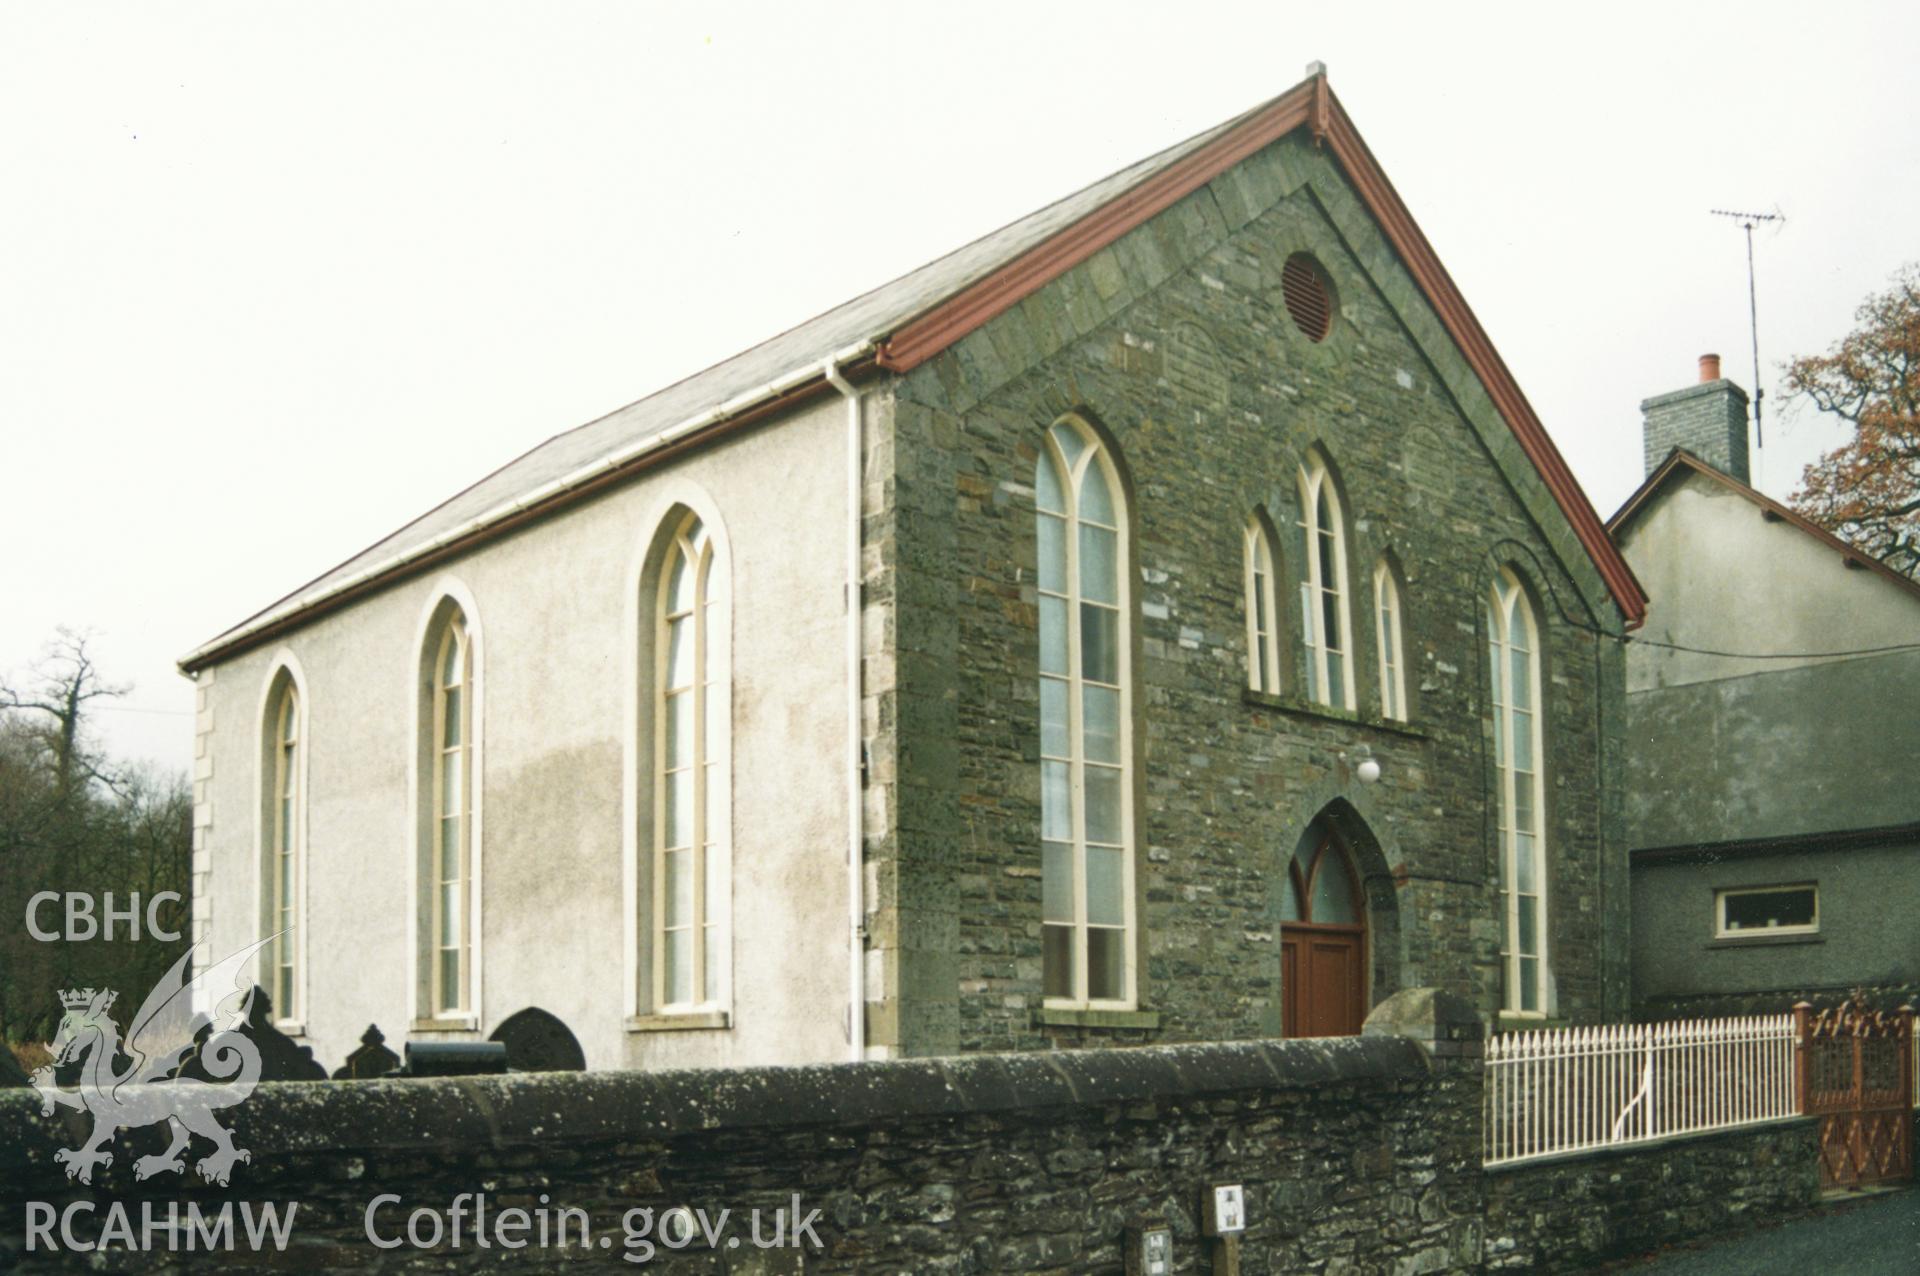 Digital copy of a colour photograph showing an exterior view of Salem Welsh Baptist Chapel, Pumsaint, taken by Robert Scourfield, c.1996.